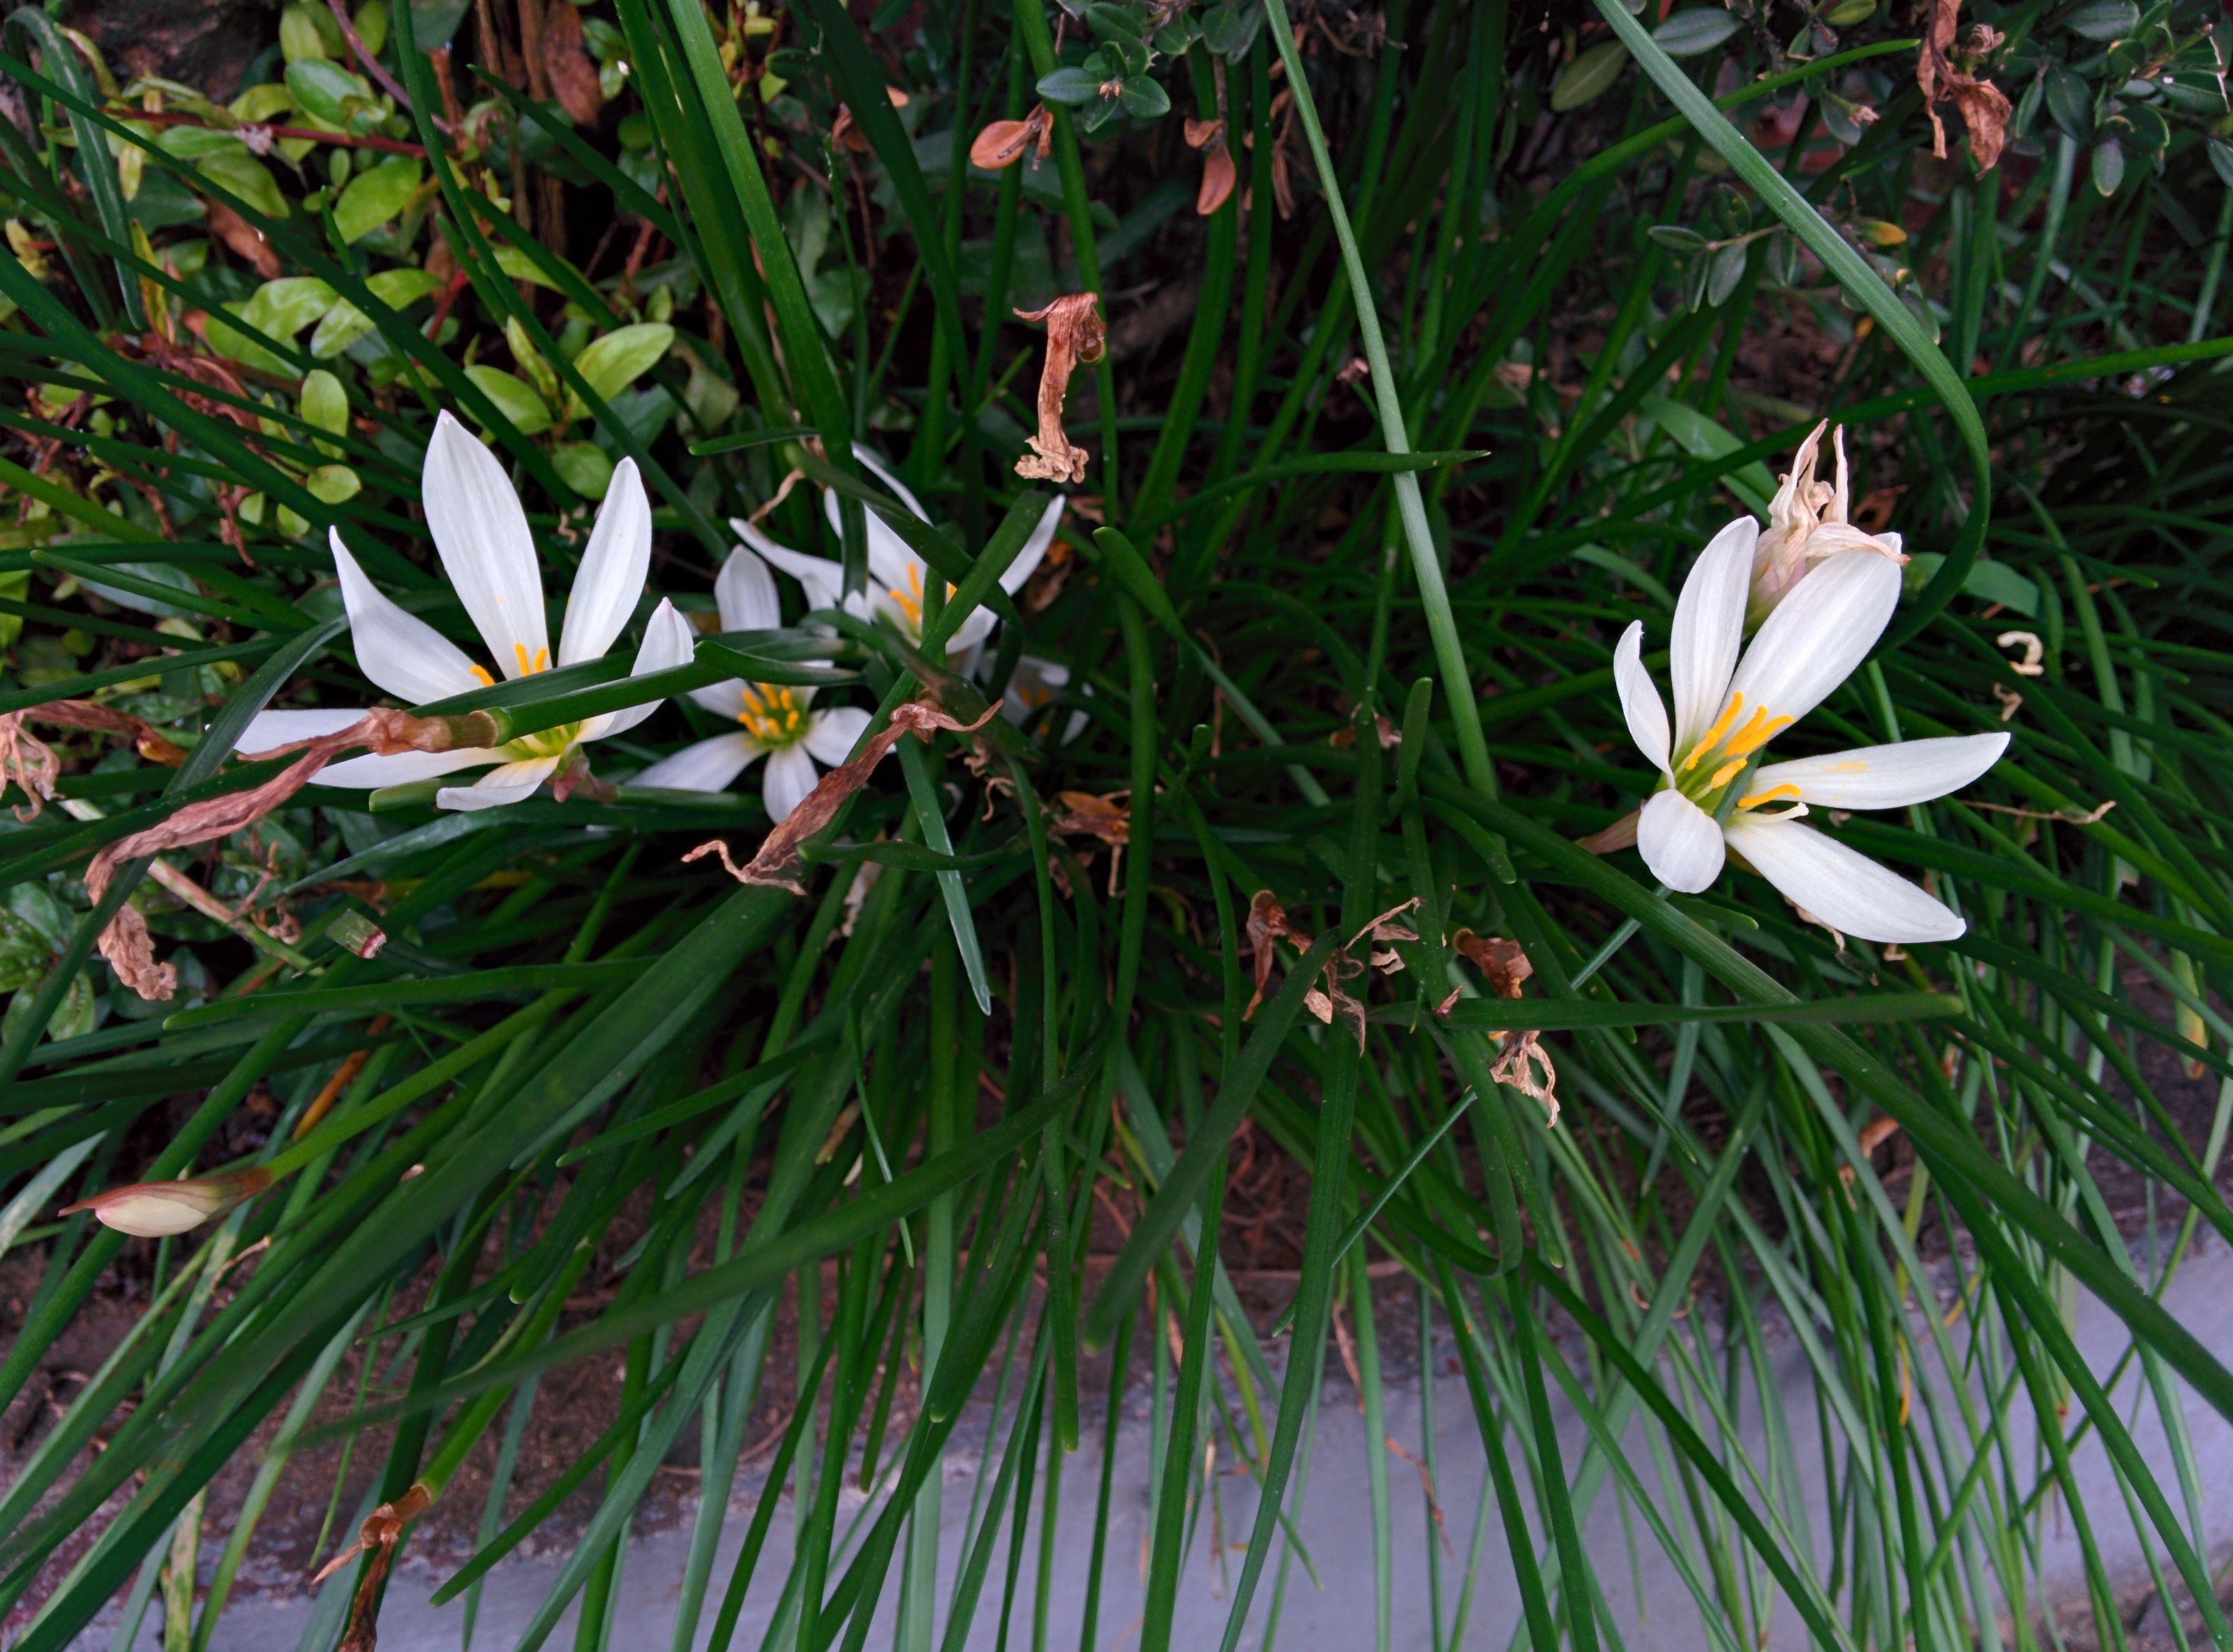 IMG_20150926_163413.jpg 난초잎 닮은 긴 이파리, 꽃잎 여섯 개의 하얀색 꽃 - 흰꽃나도사프란